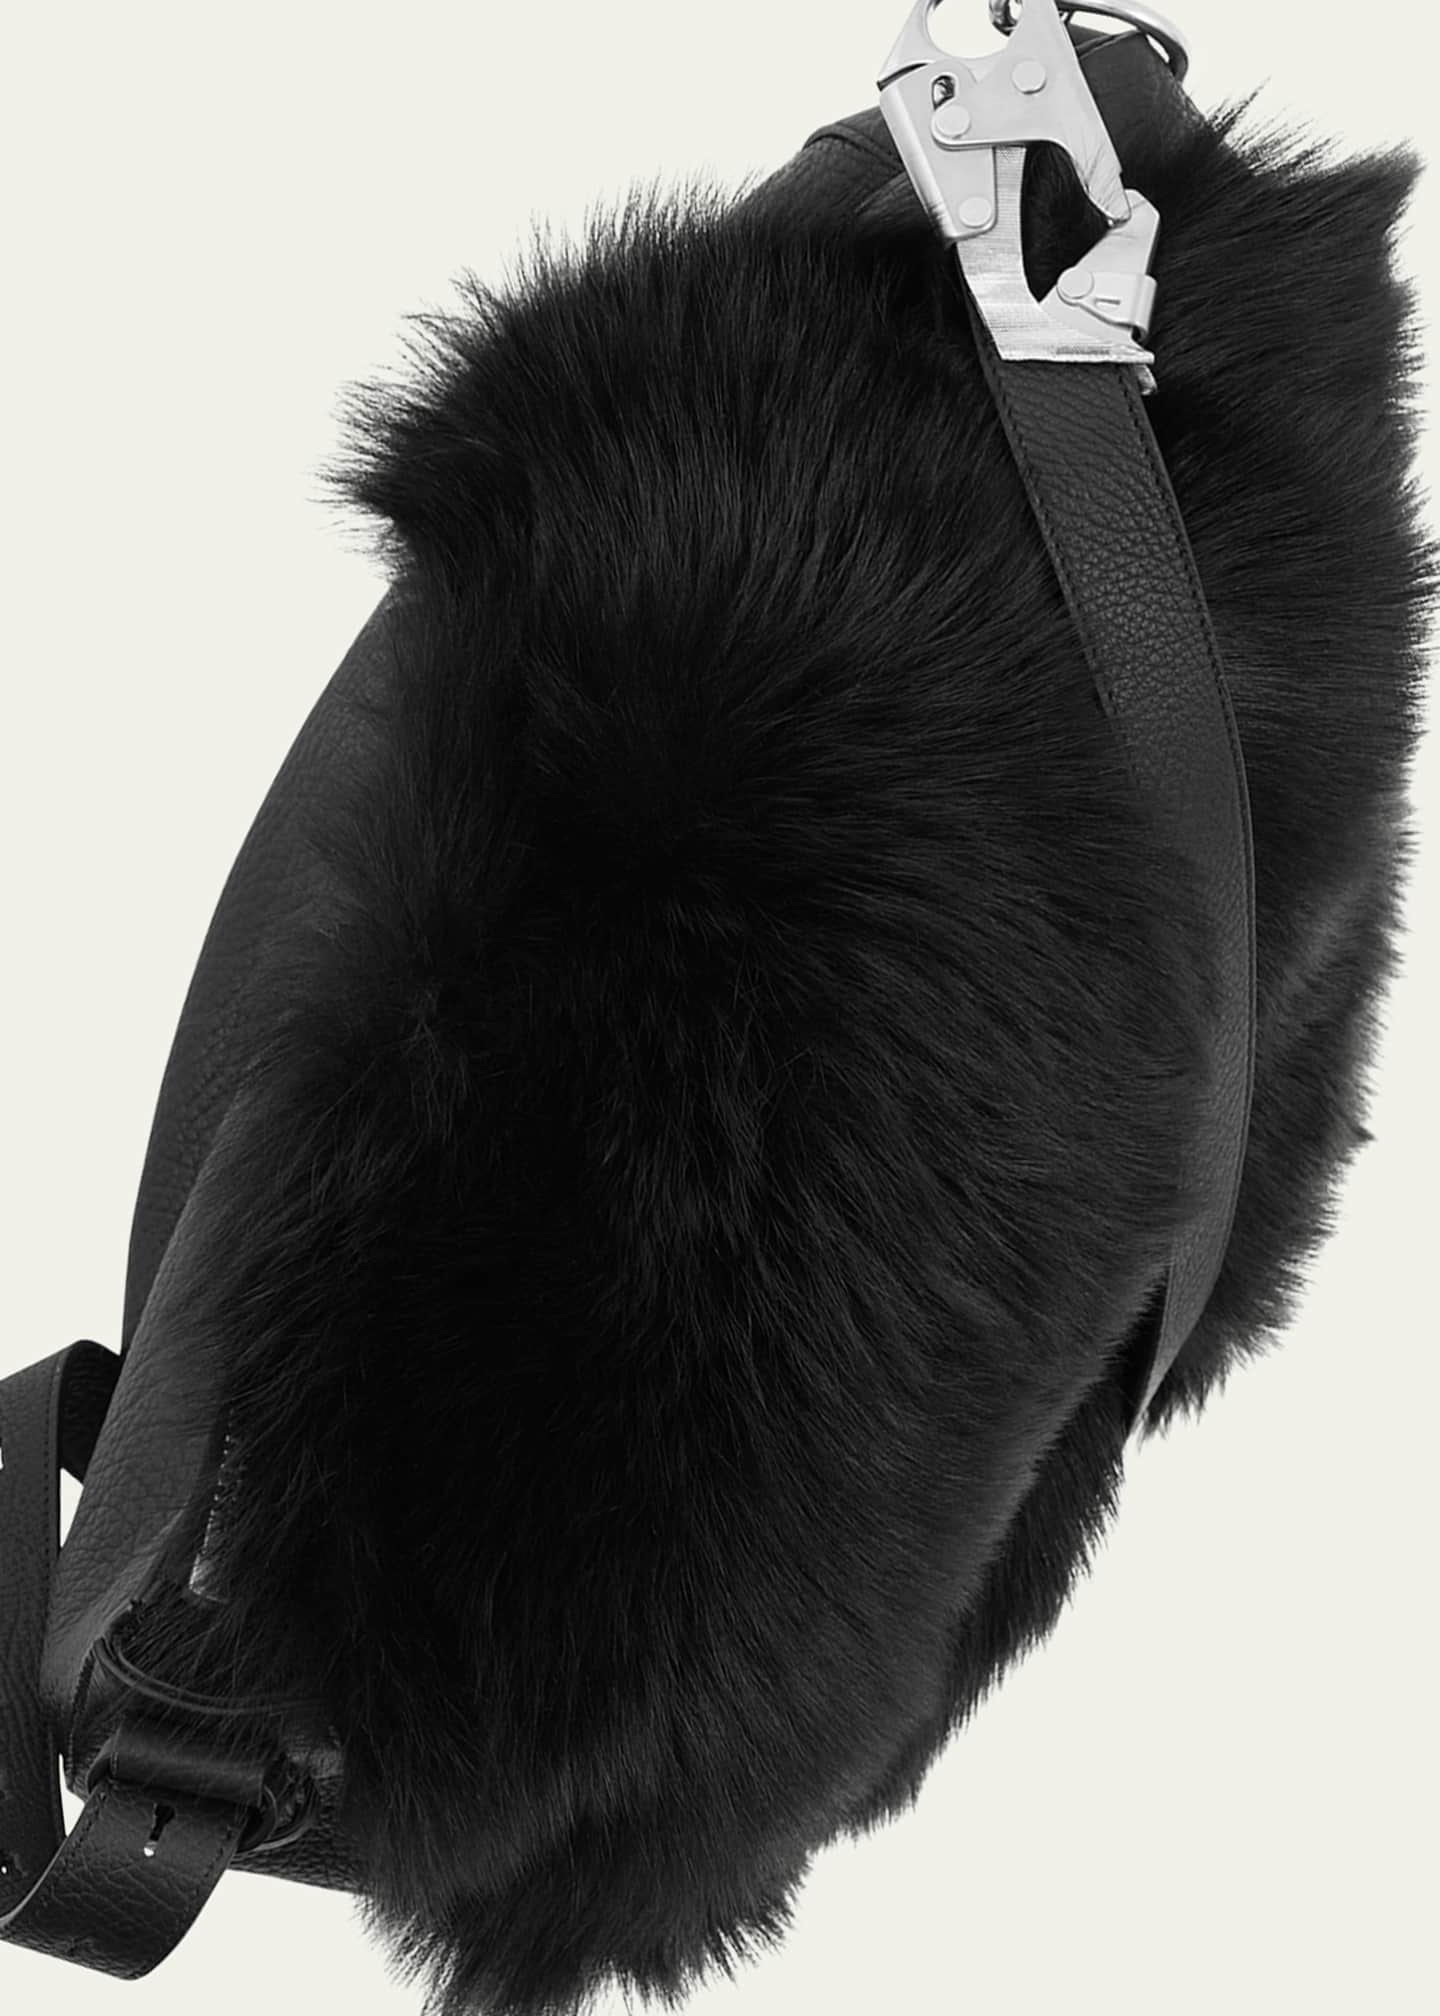 Knight Large Leather Shoulder Bag in Black - Burberry